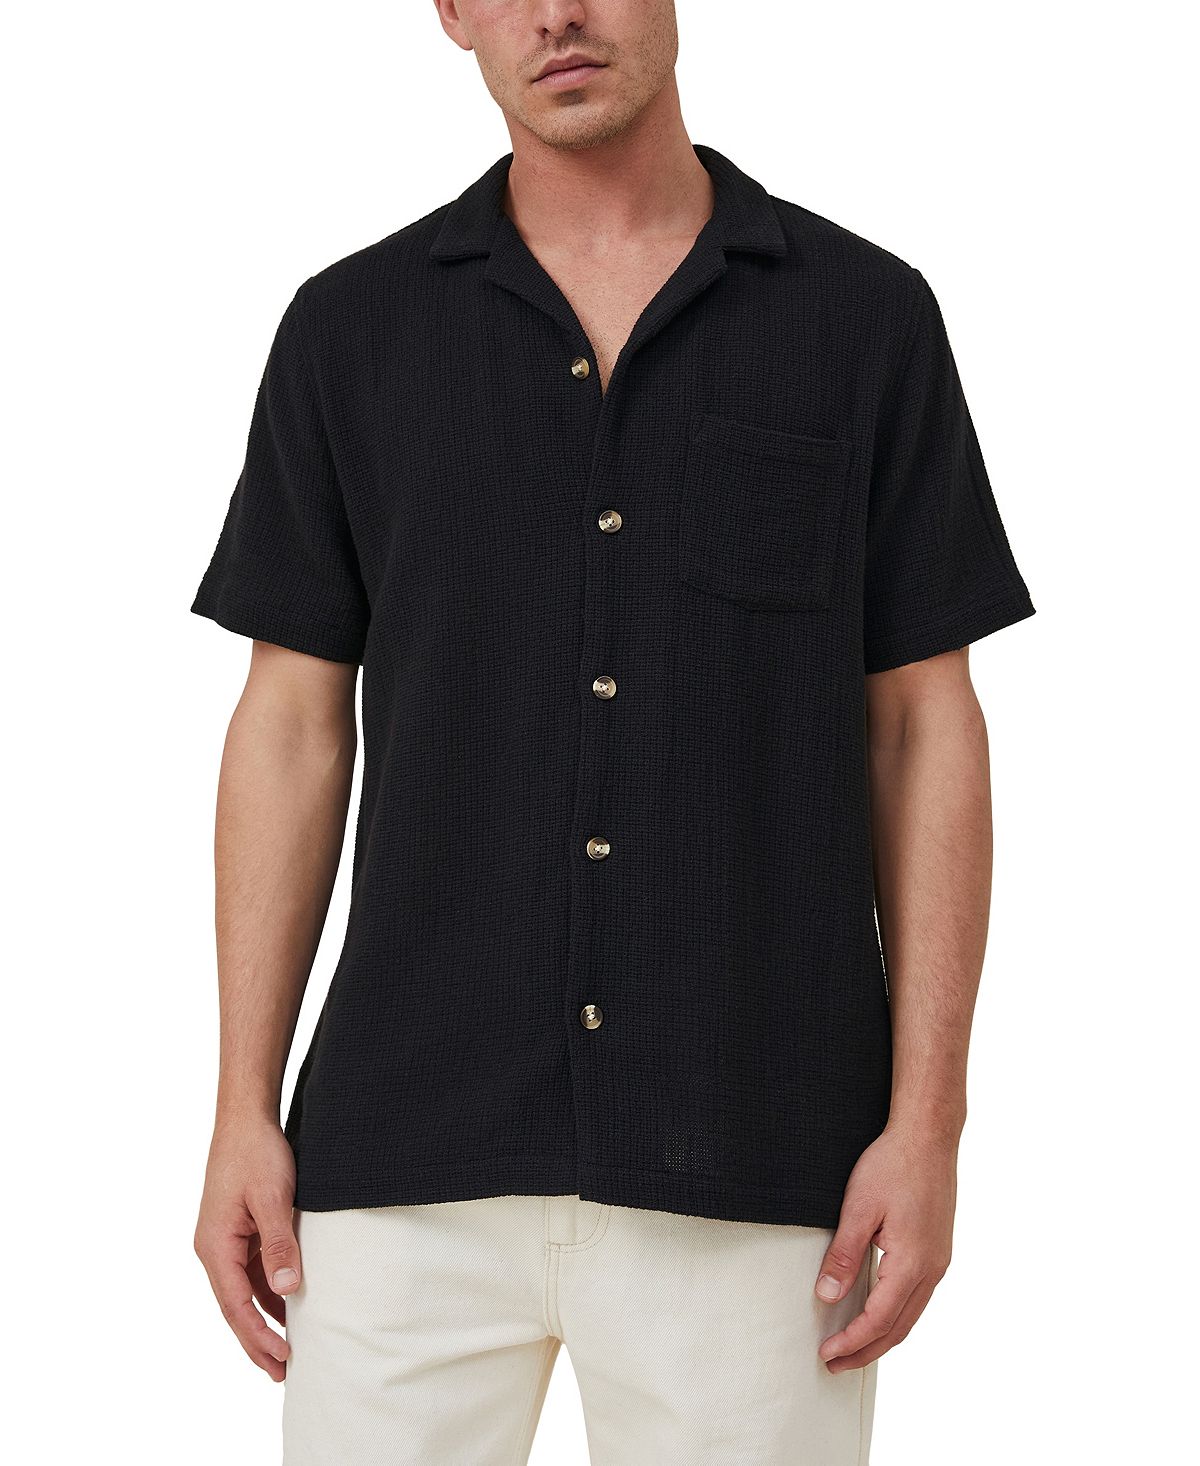 Мужская рубашка Palma с коротким рукавом COTTON ON цена и фото